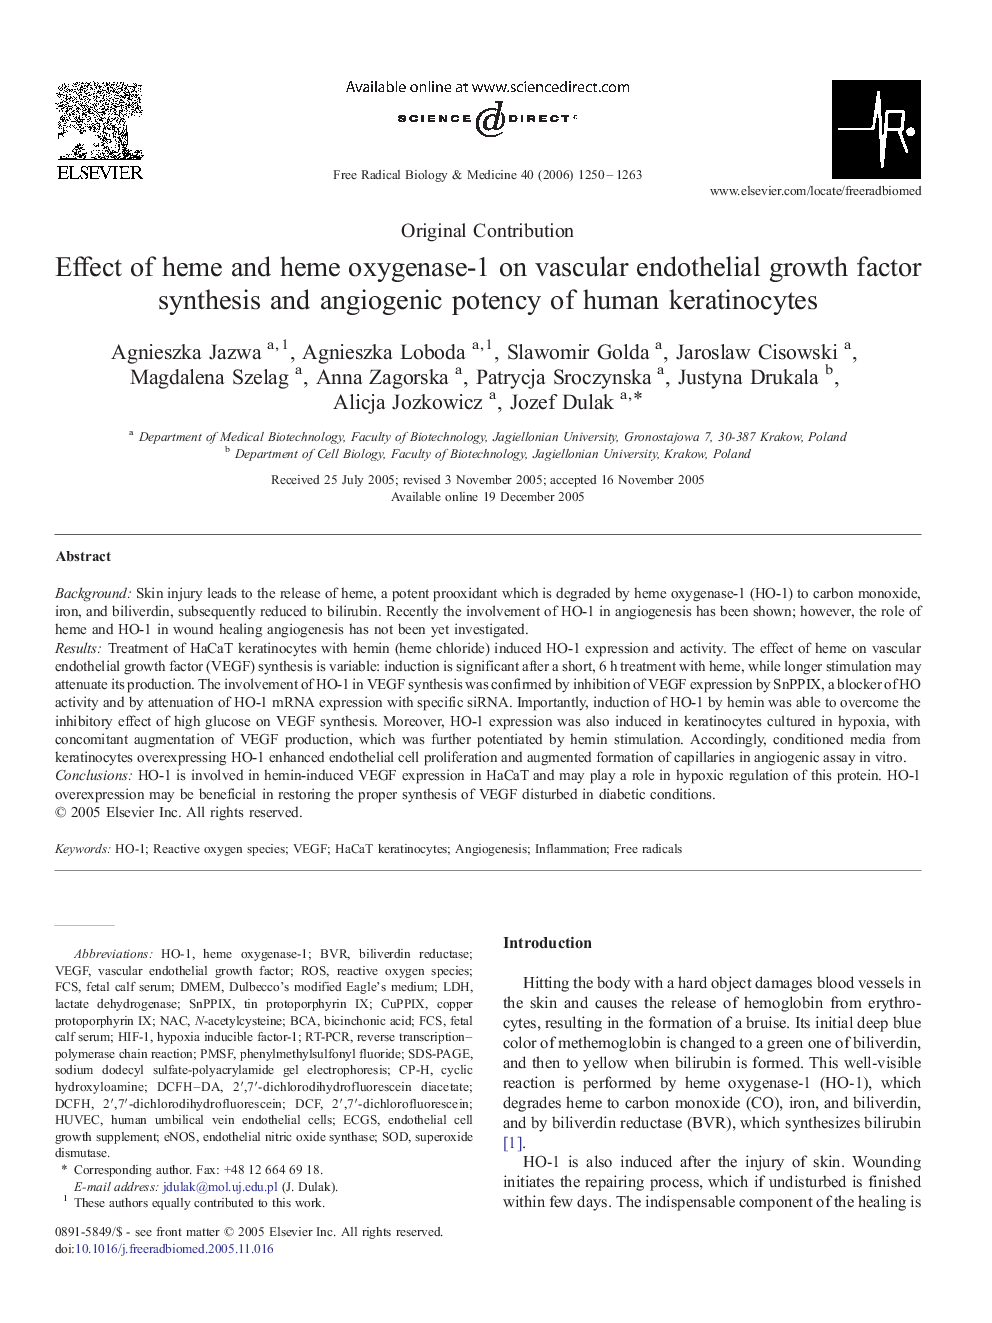 Effect of heme and heme oxygenase-1 on vascular endothelial growth factor synthesis and angiogenic potency of human keratinocytes